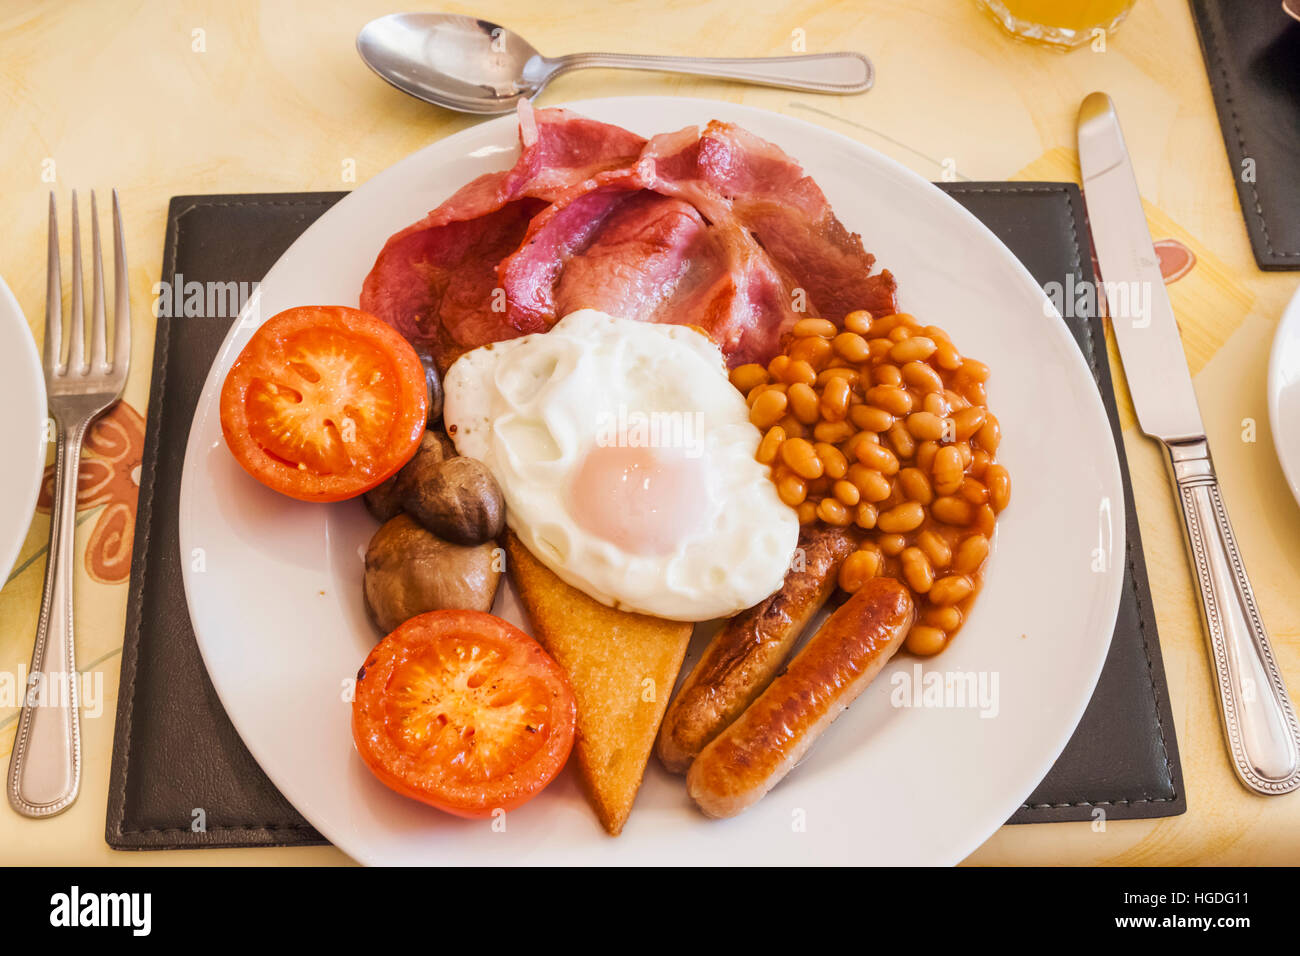 England, London, Traditional English Breakfast Stock Photo - Alamy